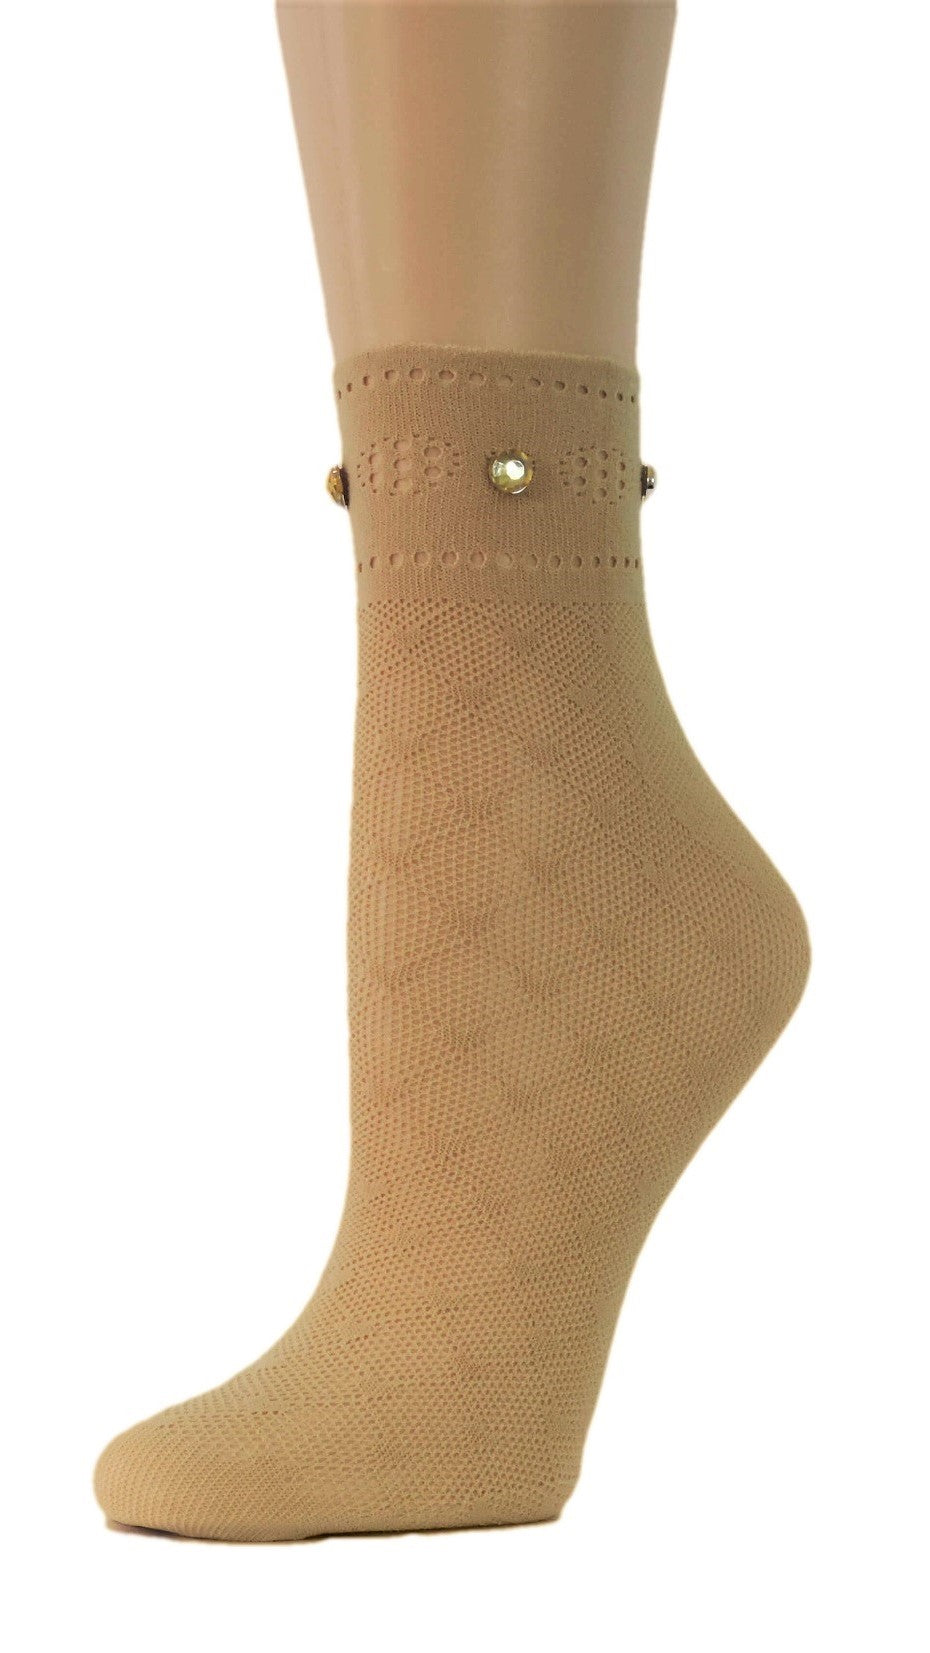 Tiny Heart Custom Mesh Socks with beads - Global Trendz Fashion®